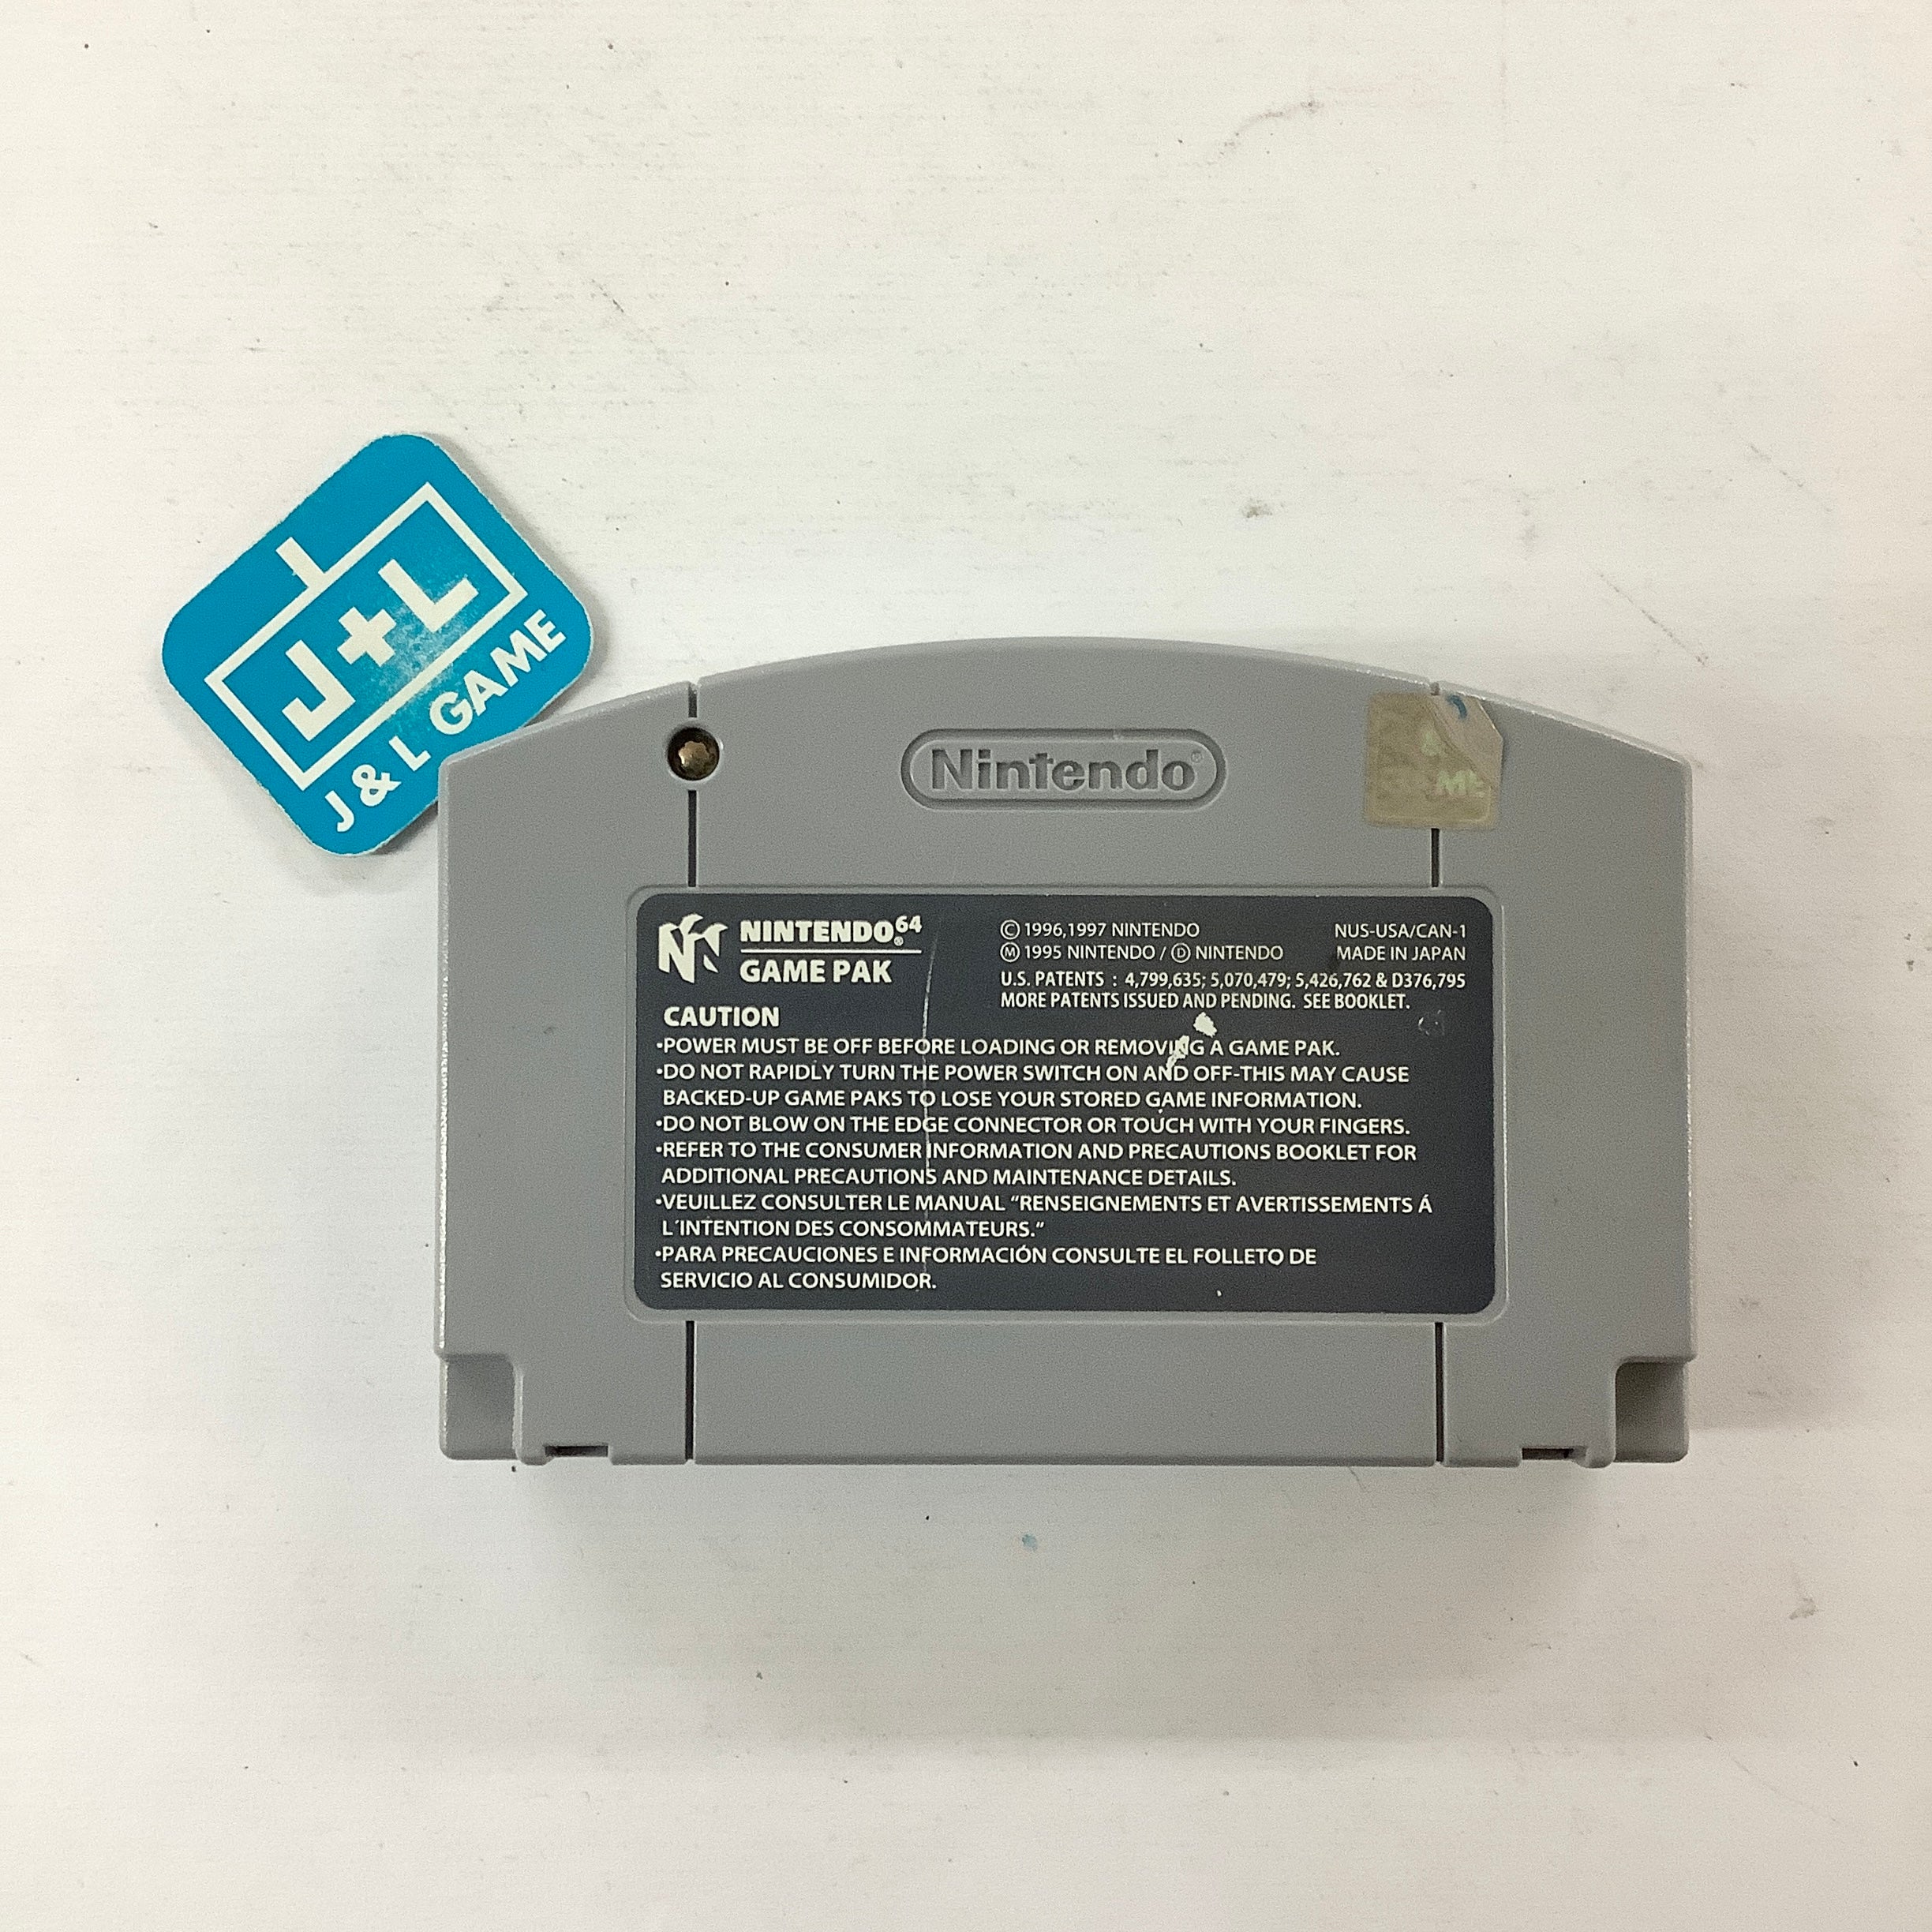 Iggy's Reckin' Balls - (N64) Nintendo 64 [Pre-Owned] Video Games Acclaim   